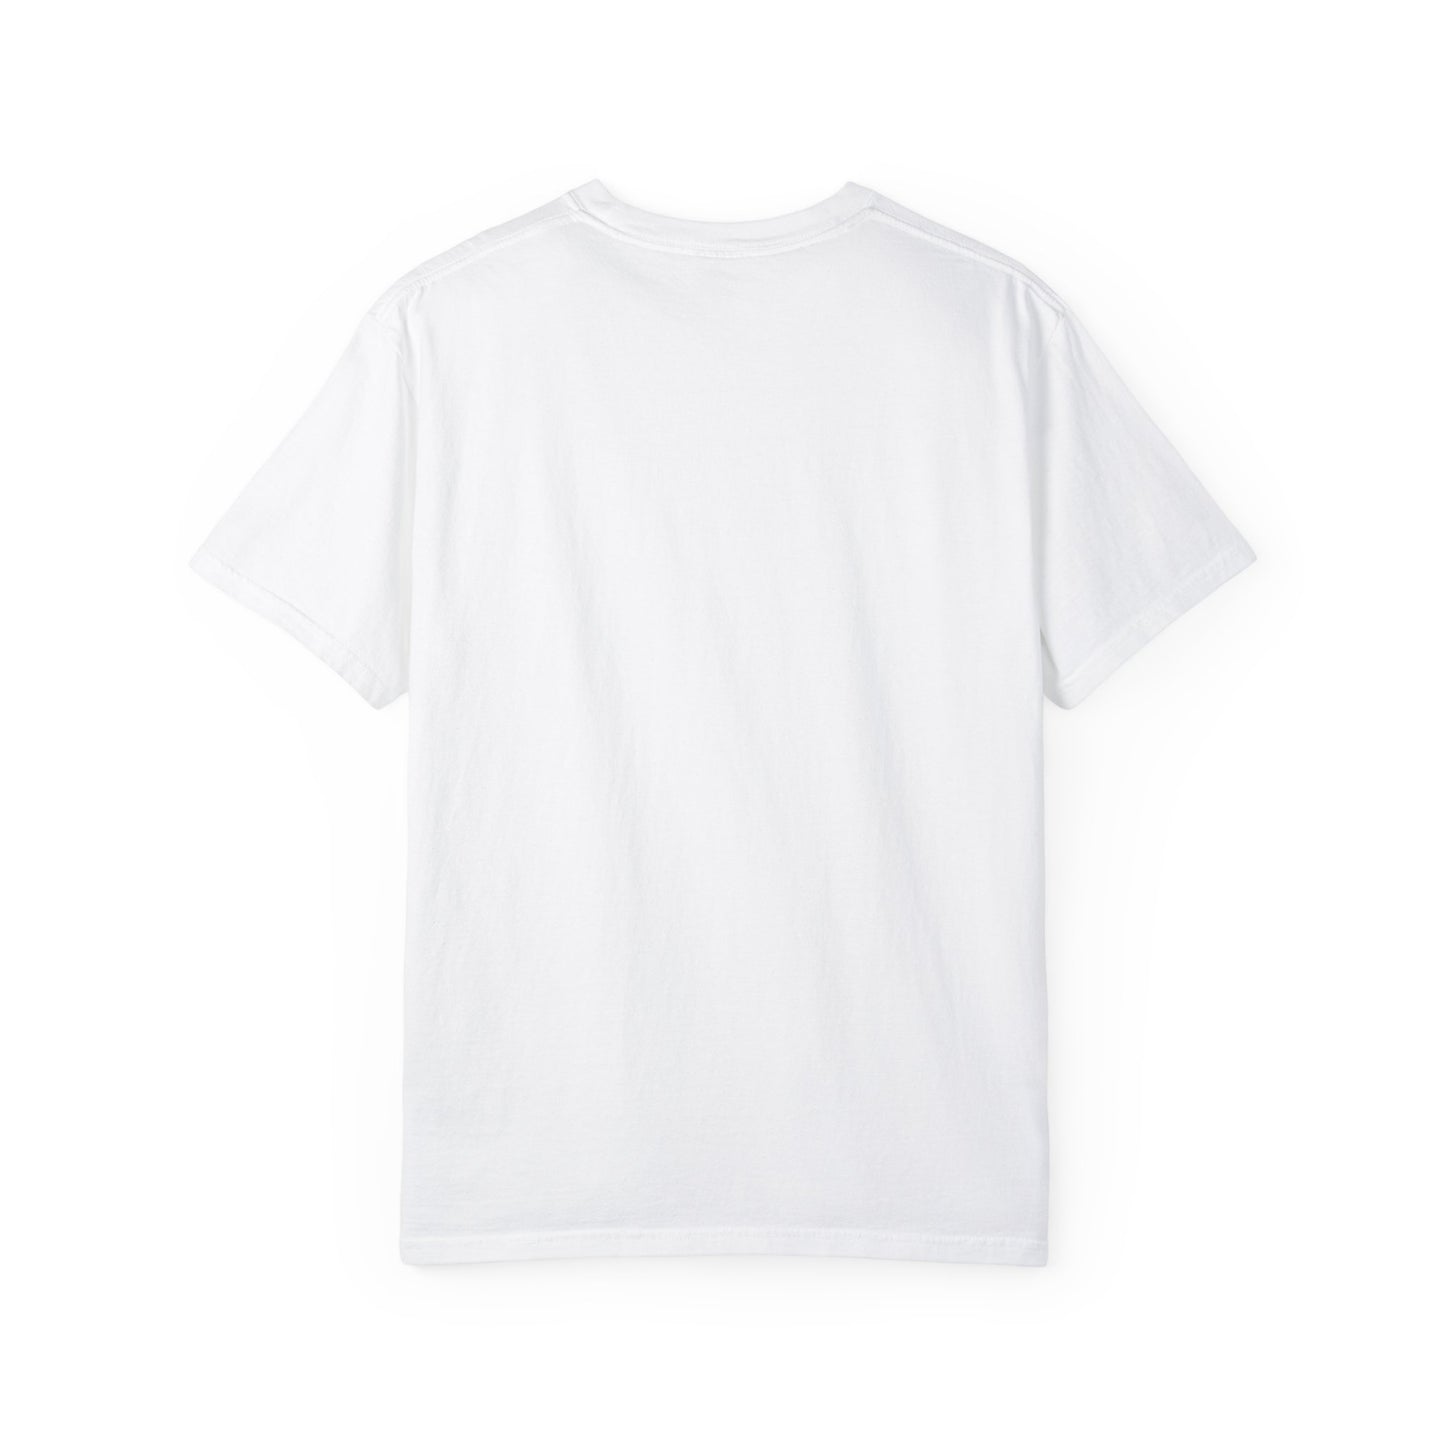 City Skylione Unisex Garment-Dyed T-shirt